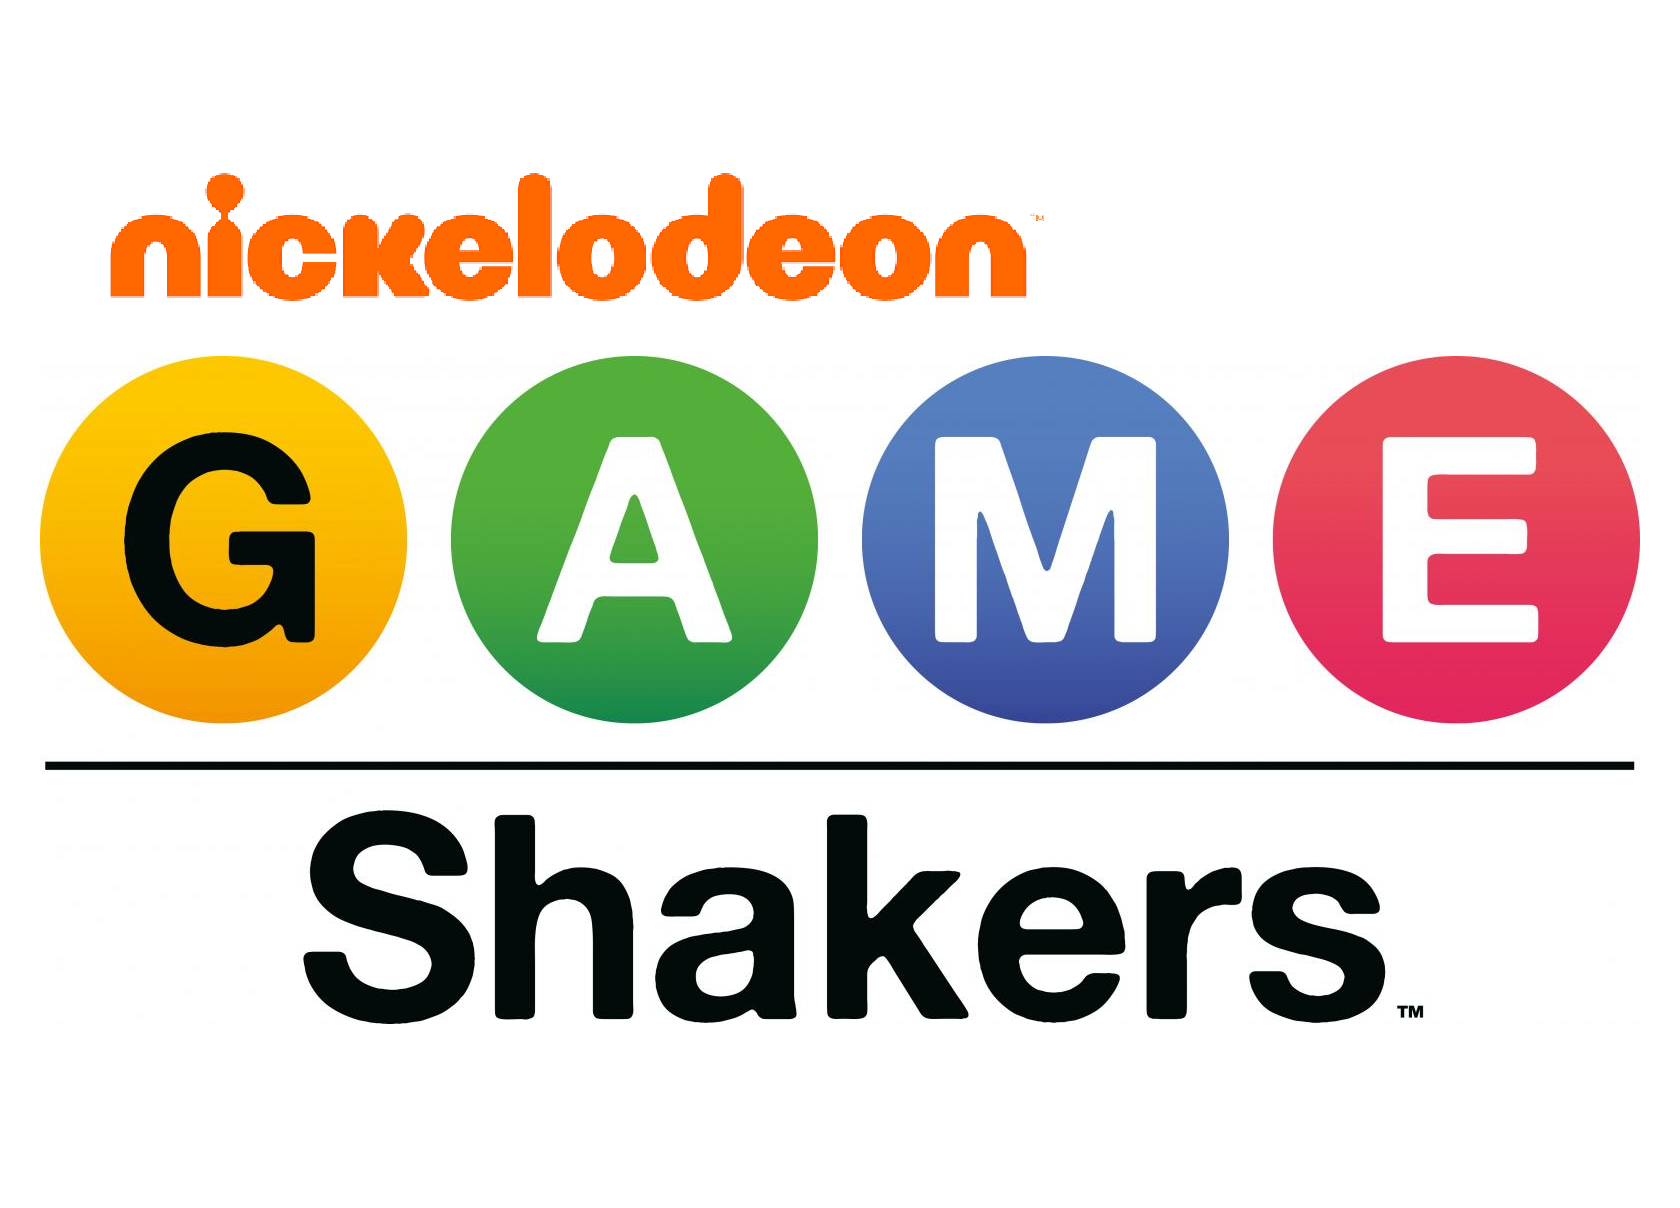 Kenan & Kel' Alum Kel Mitchell to Star in 'Game Shakers' on